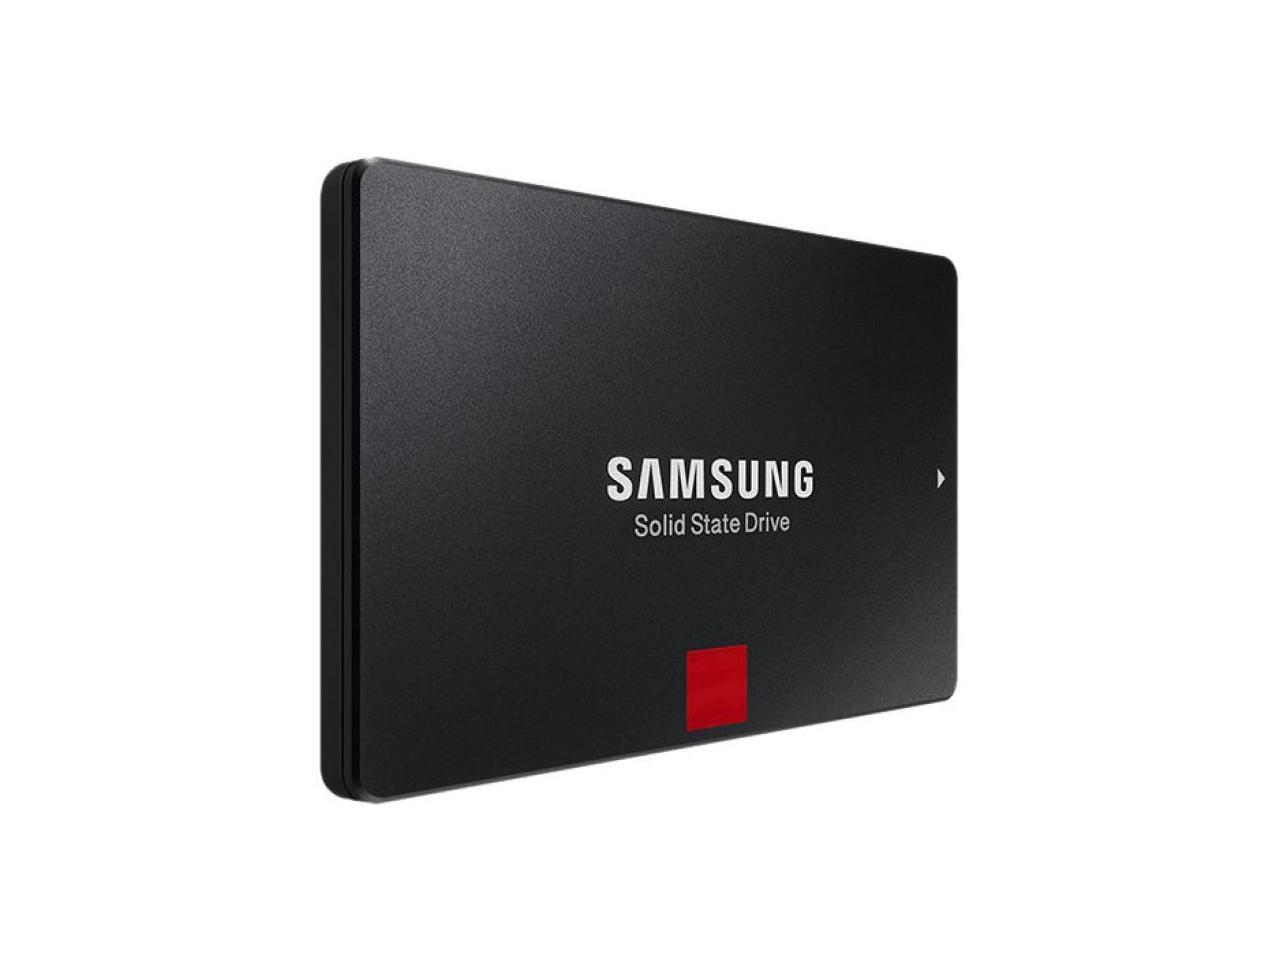 Samsung 860 Pro Series 2Tb 2.5 Inch Sata3 Solid State Drive (Samsung V-Nand 2Bit Mlc)